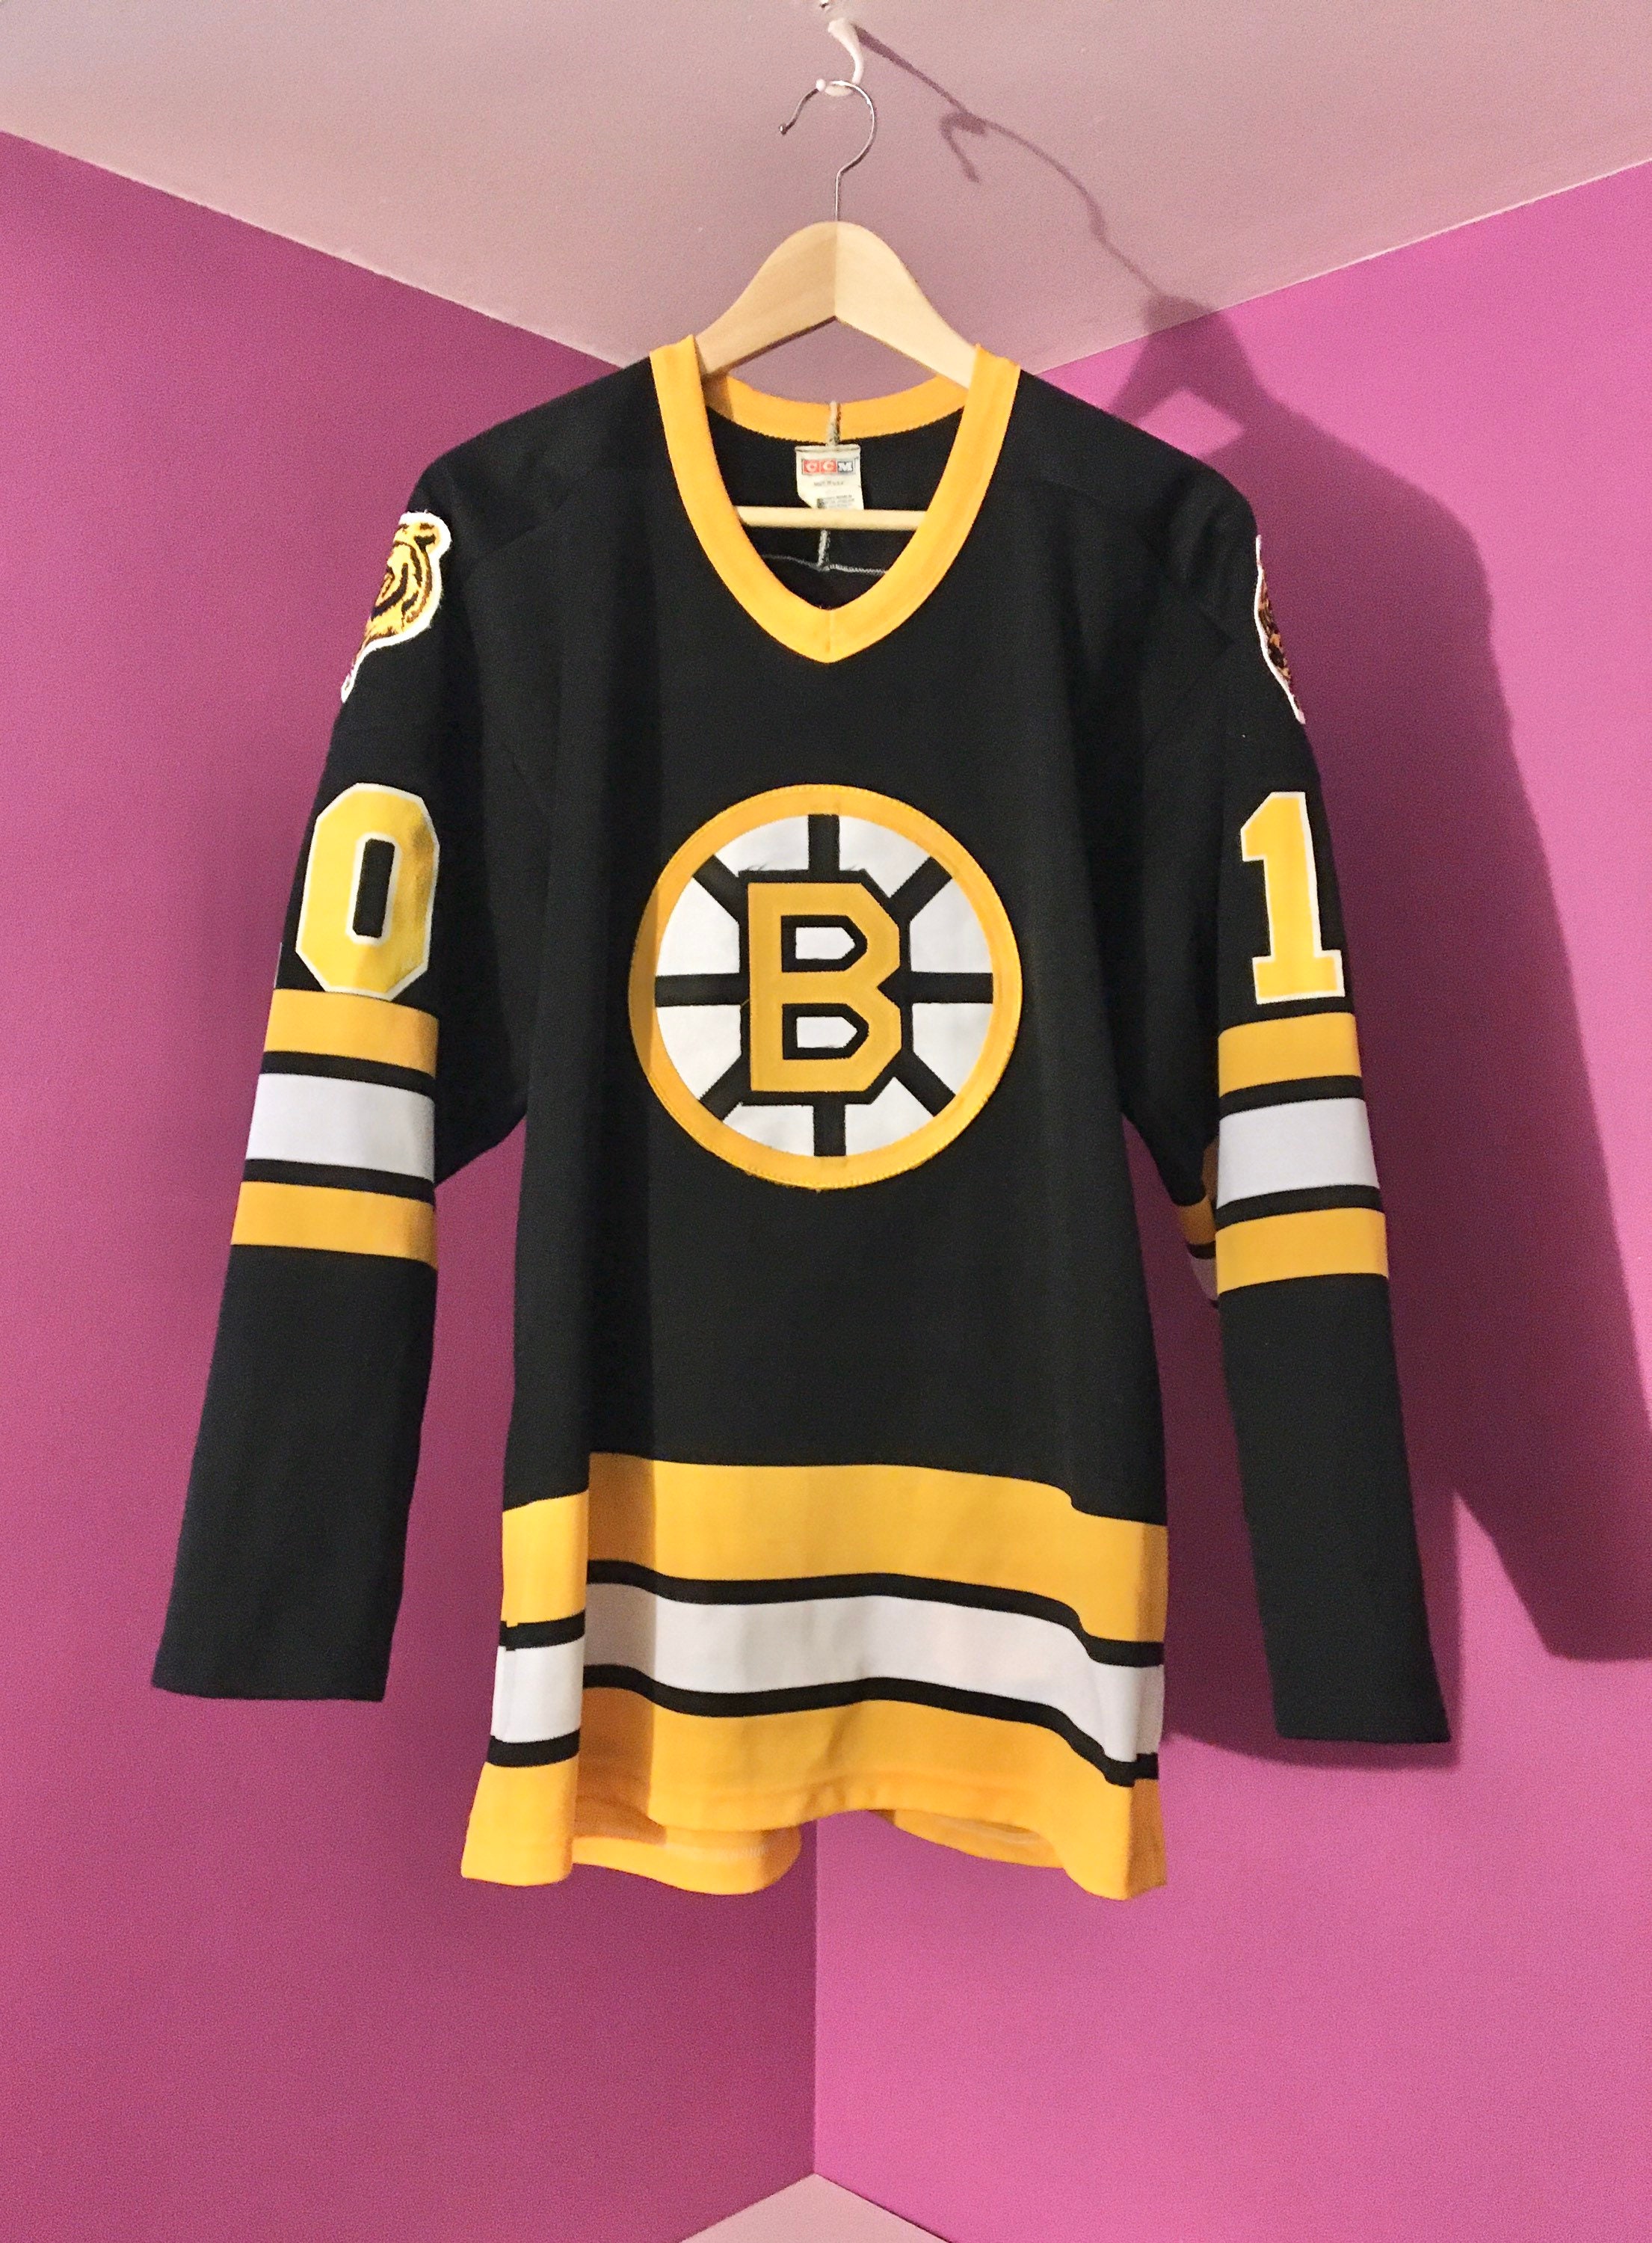 NWT Adidas Adult NHL Boston Bruins Jersey